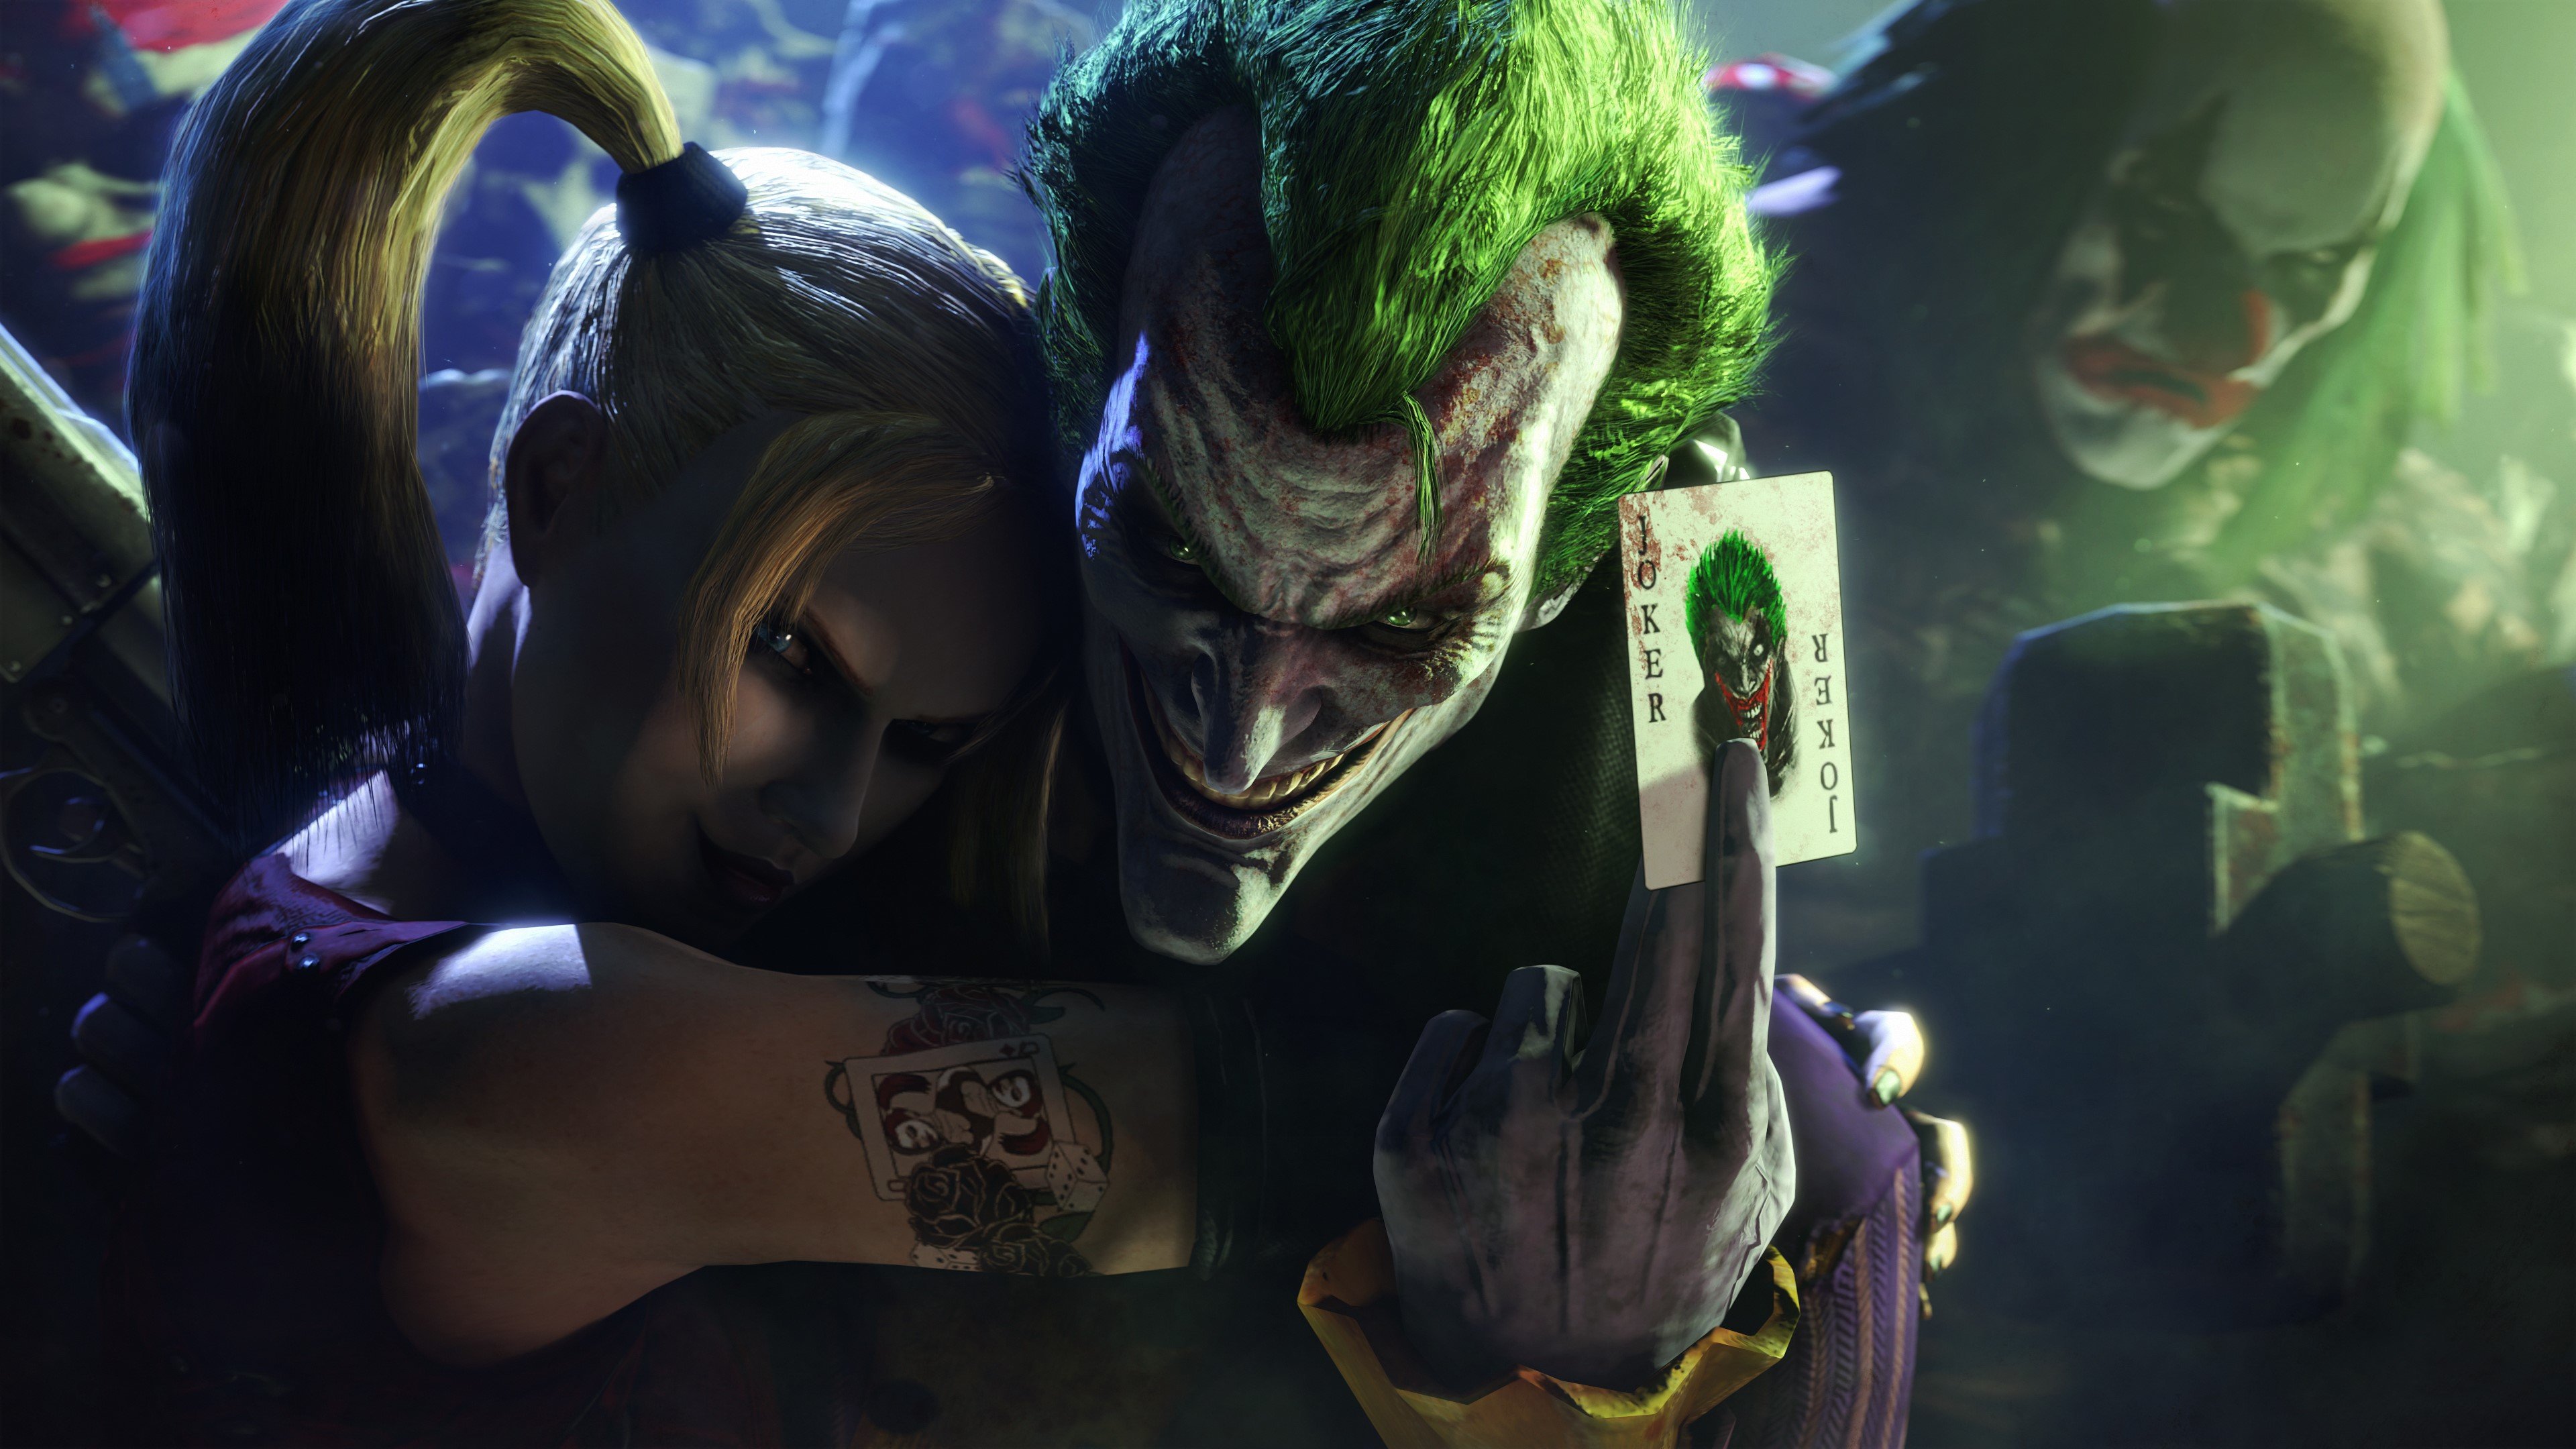 Wallpaper Joker and Harley Quinn of Batman Arkham